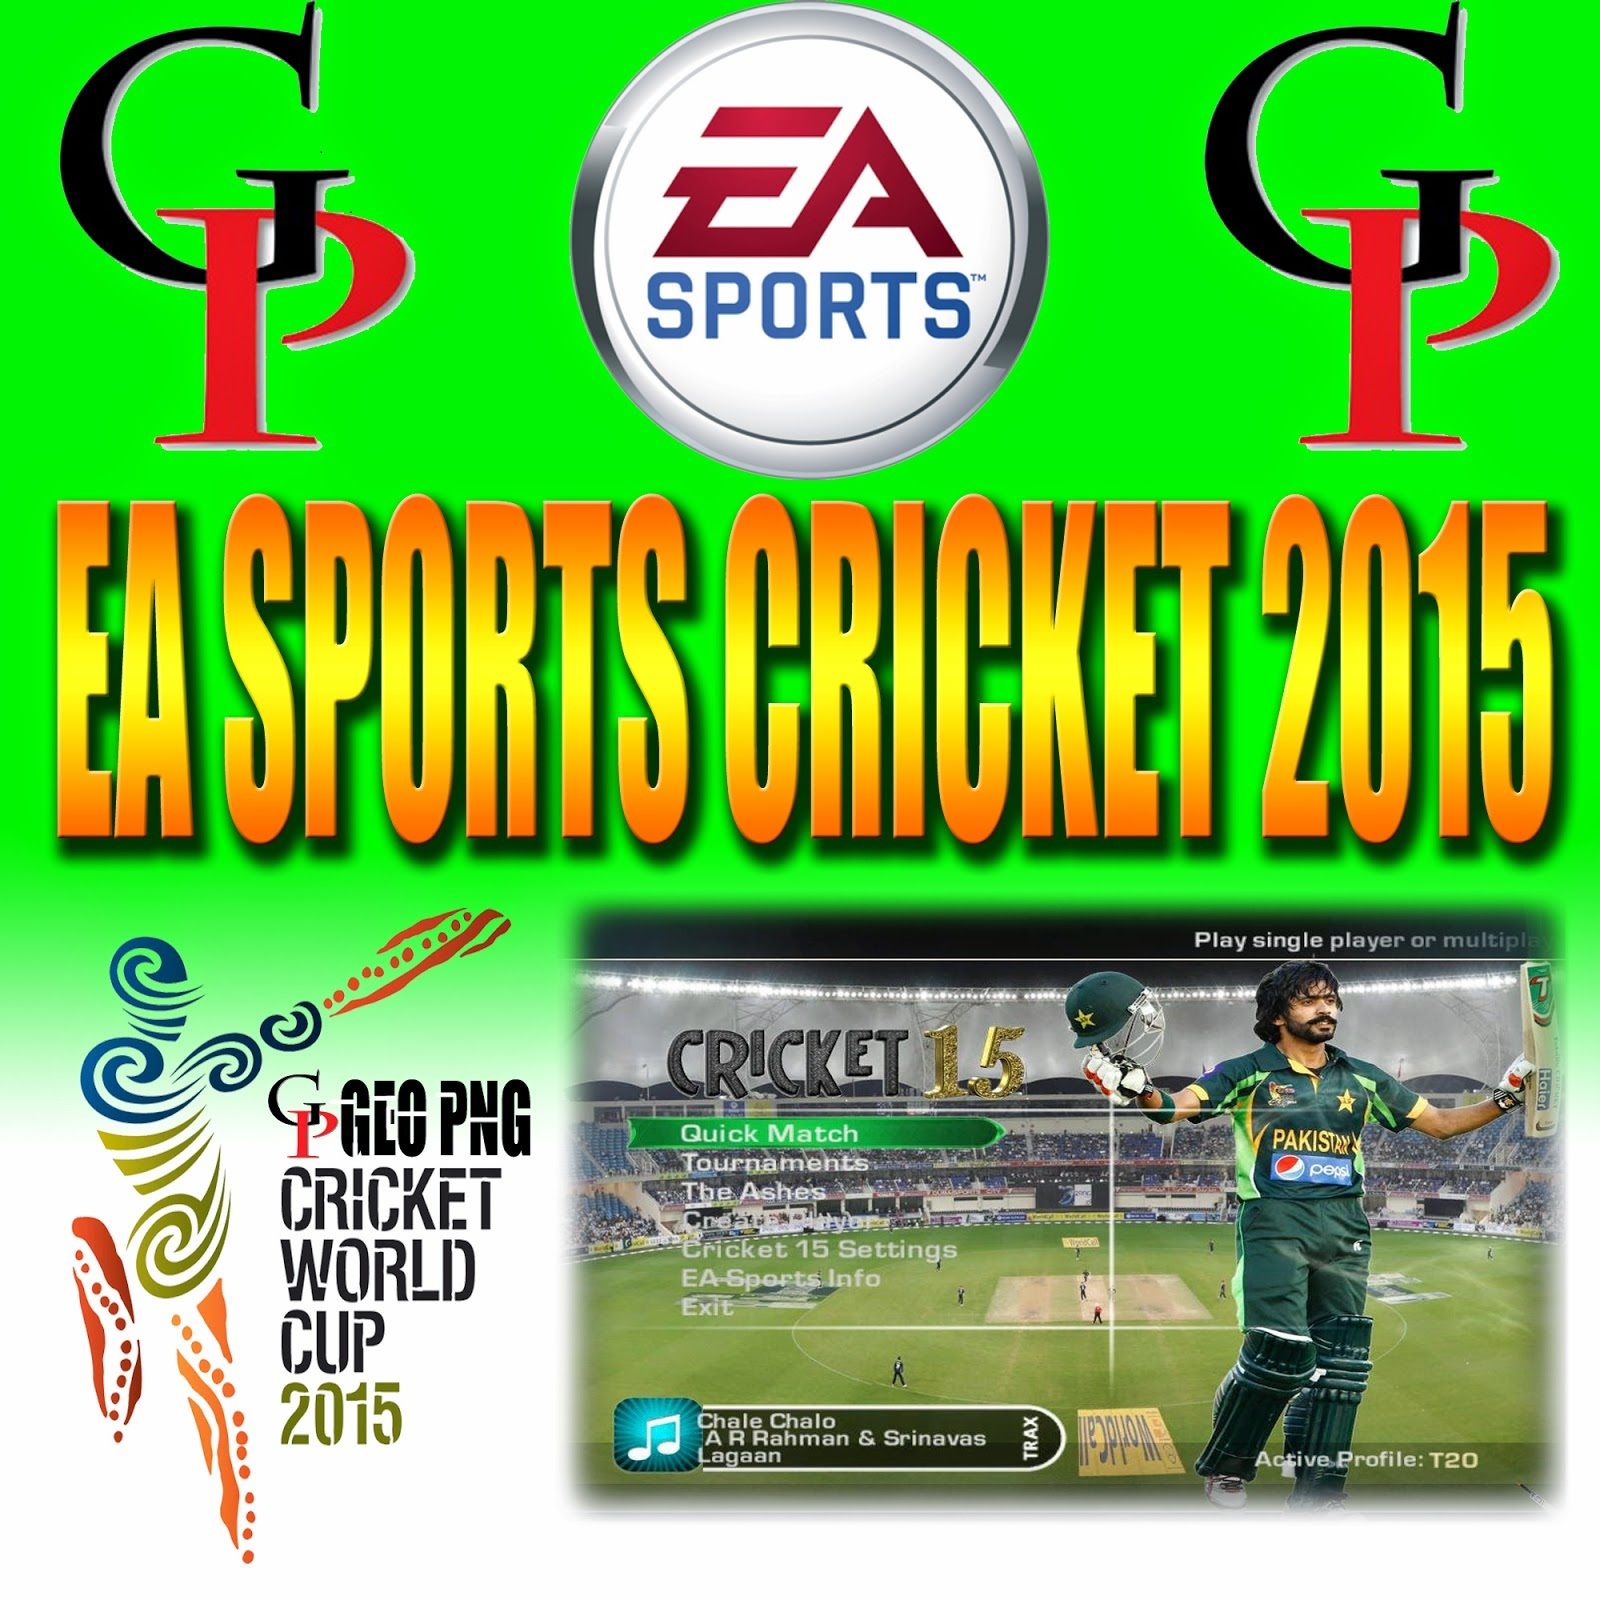 ea sports cricket 2015 free download full version windows 8